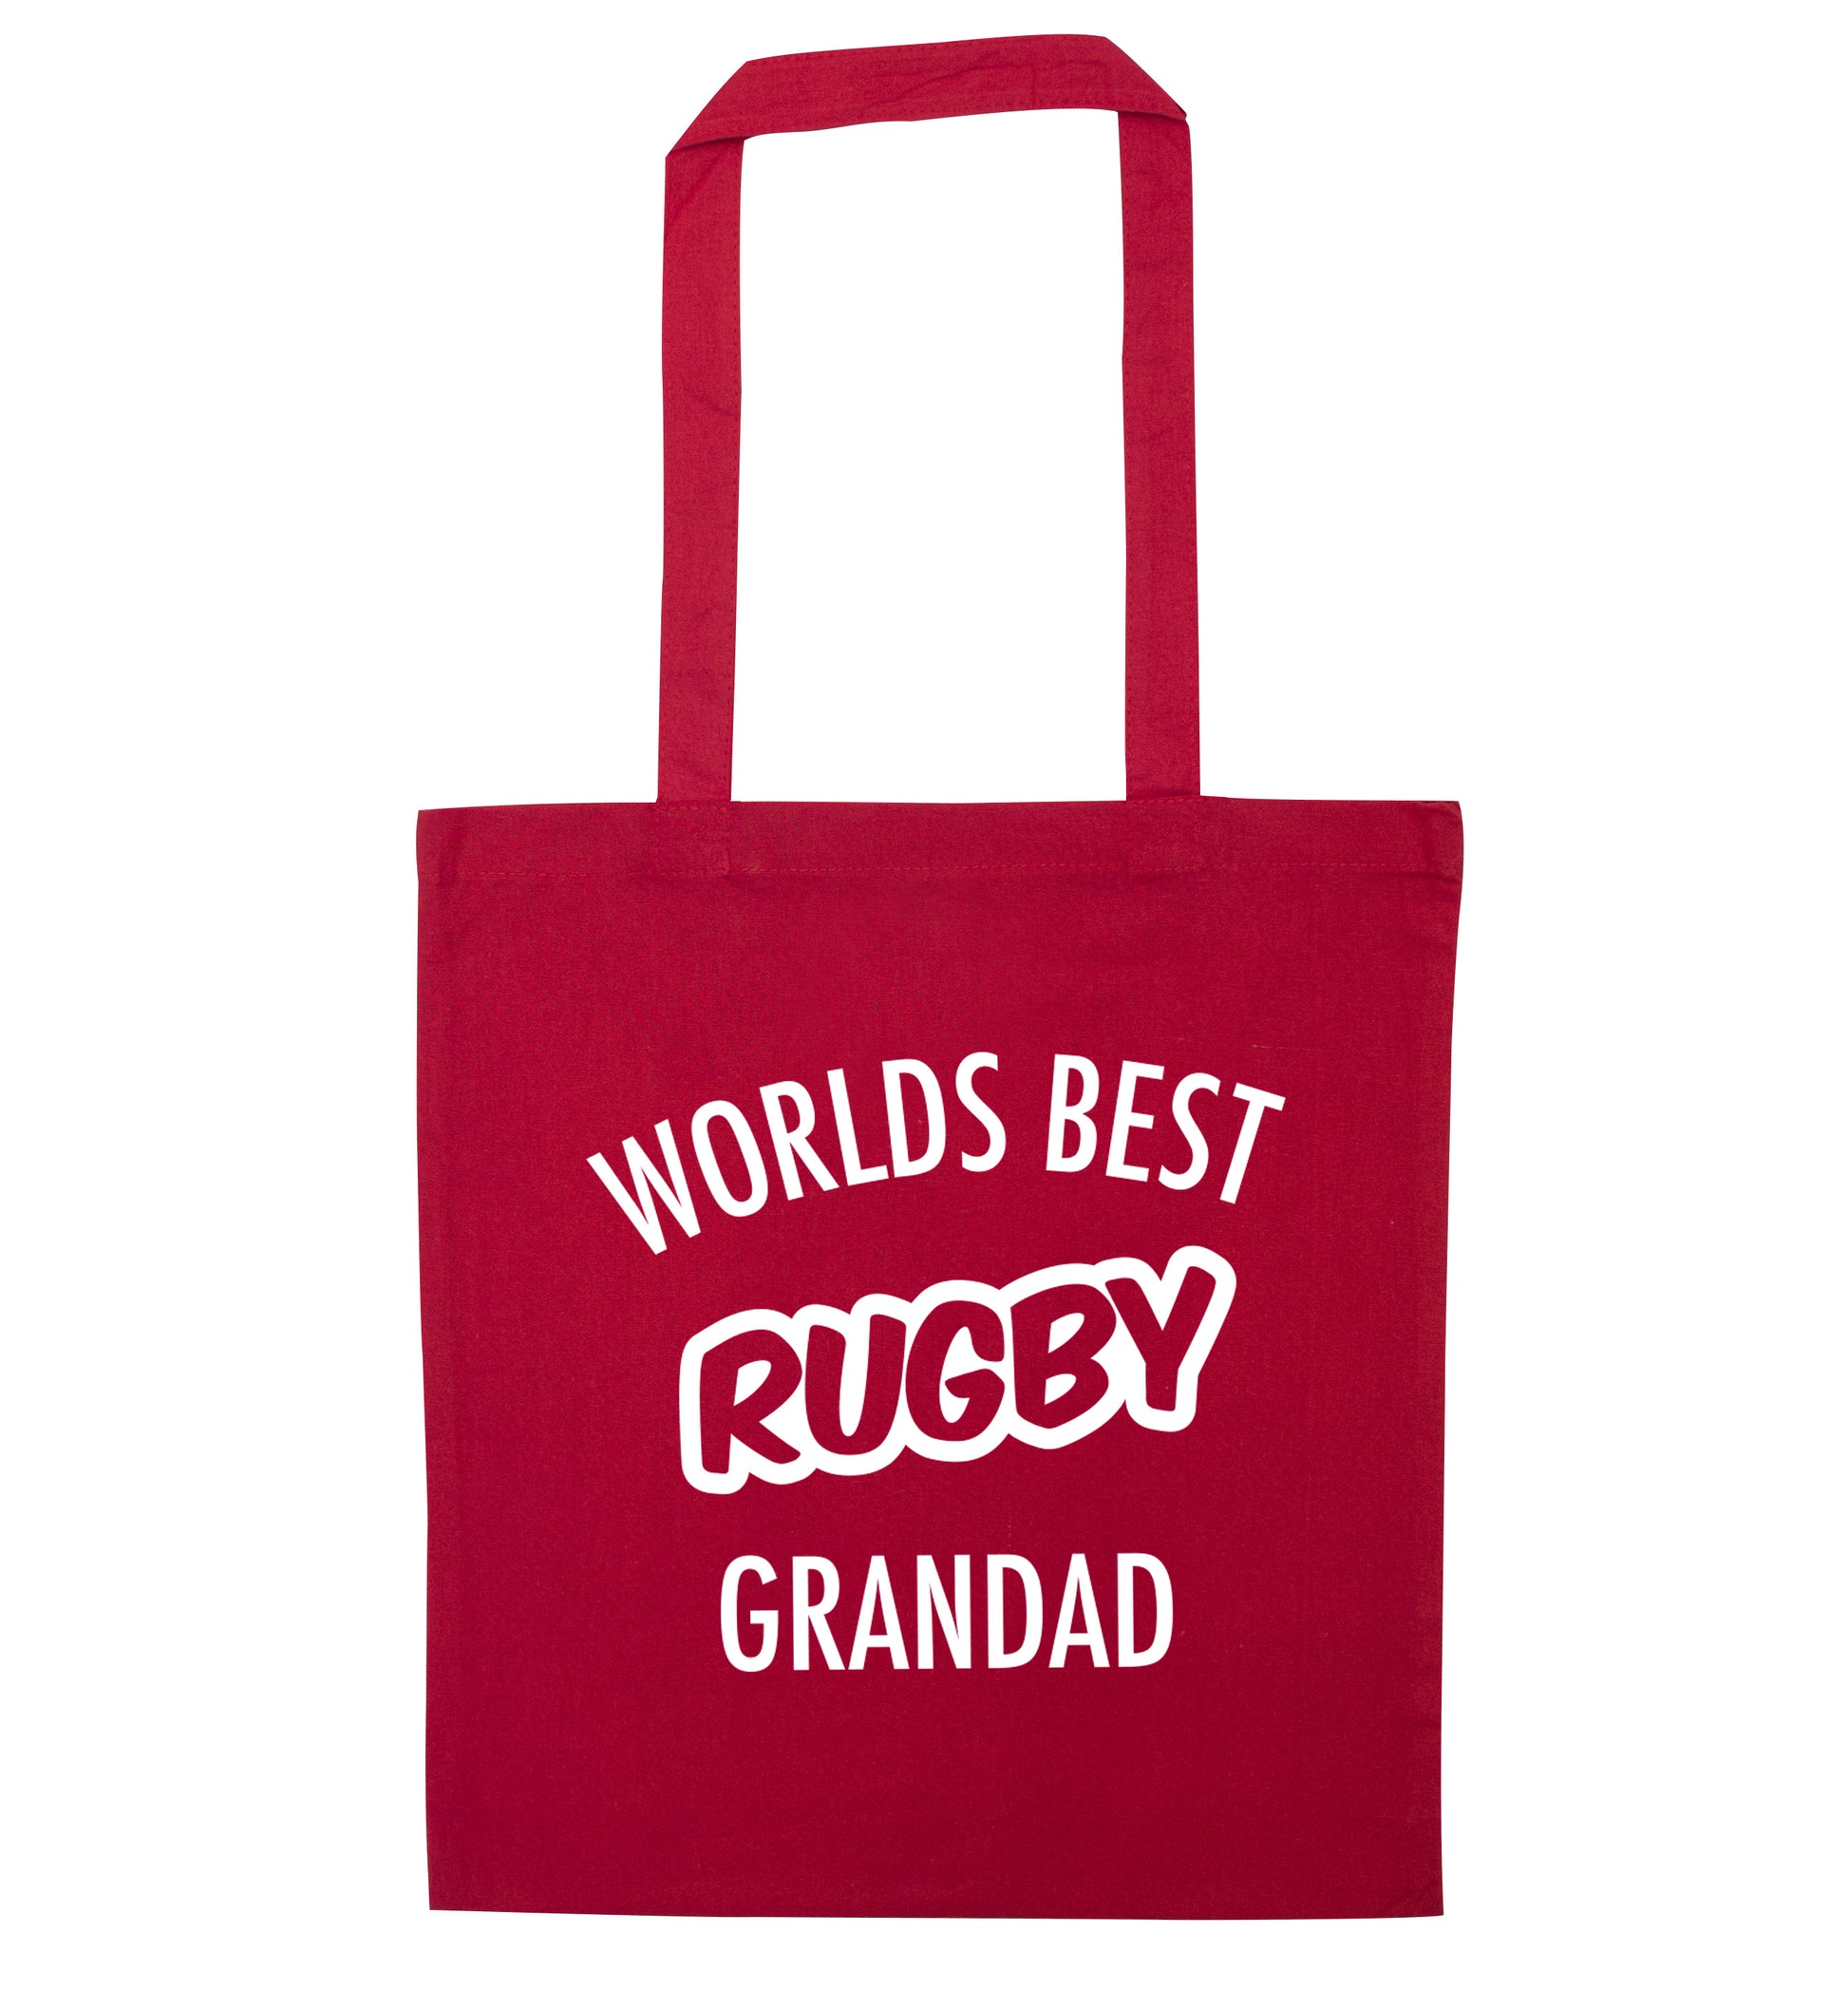 Worlds best rugby grandad red tote bag